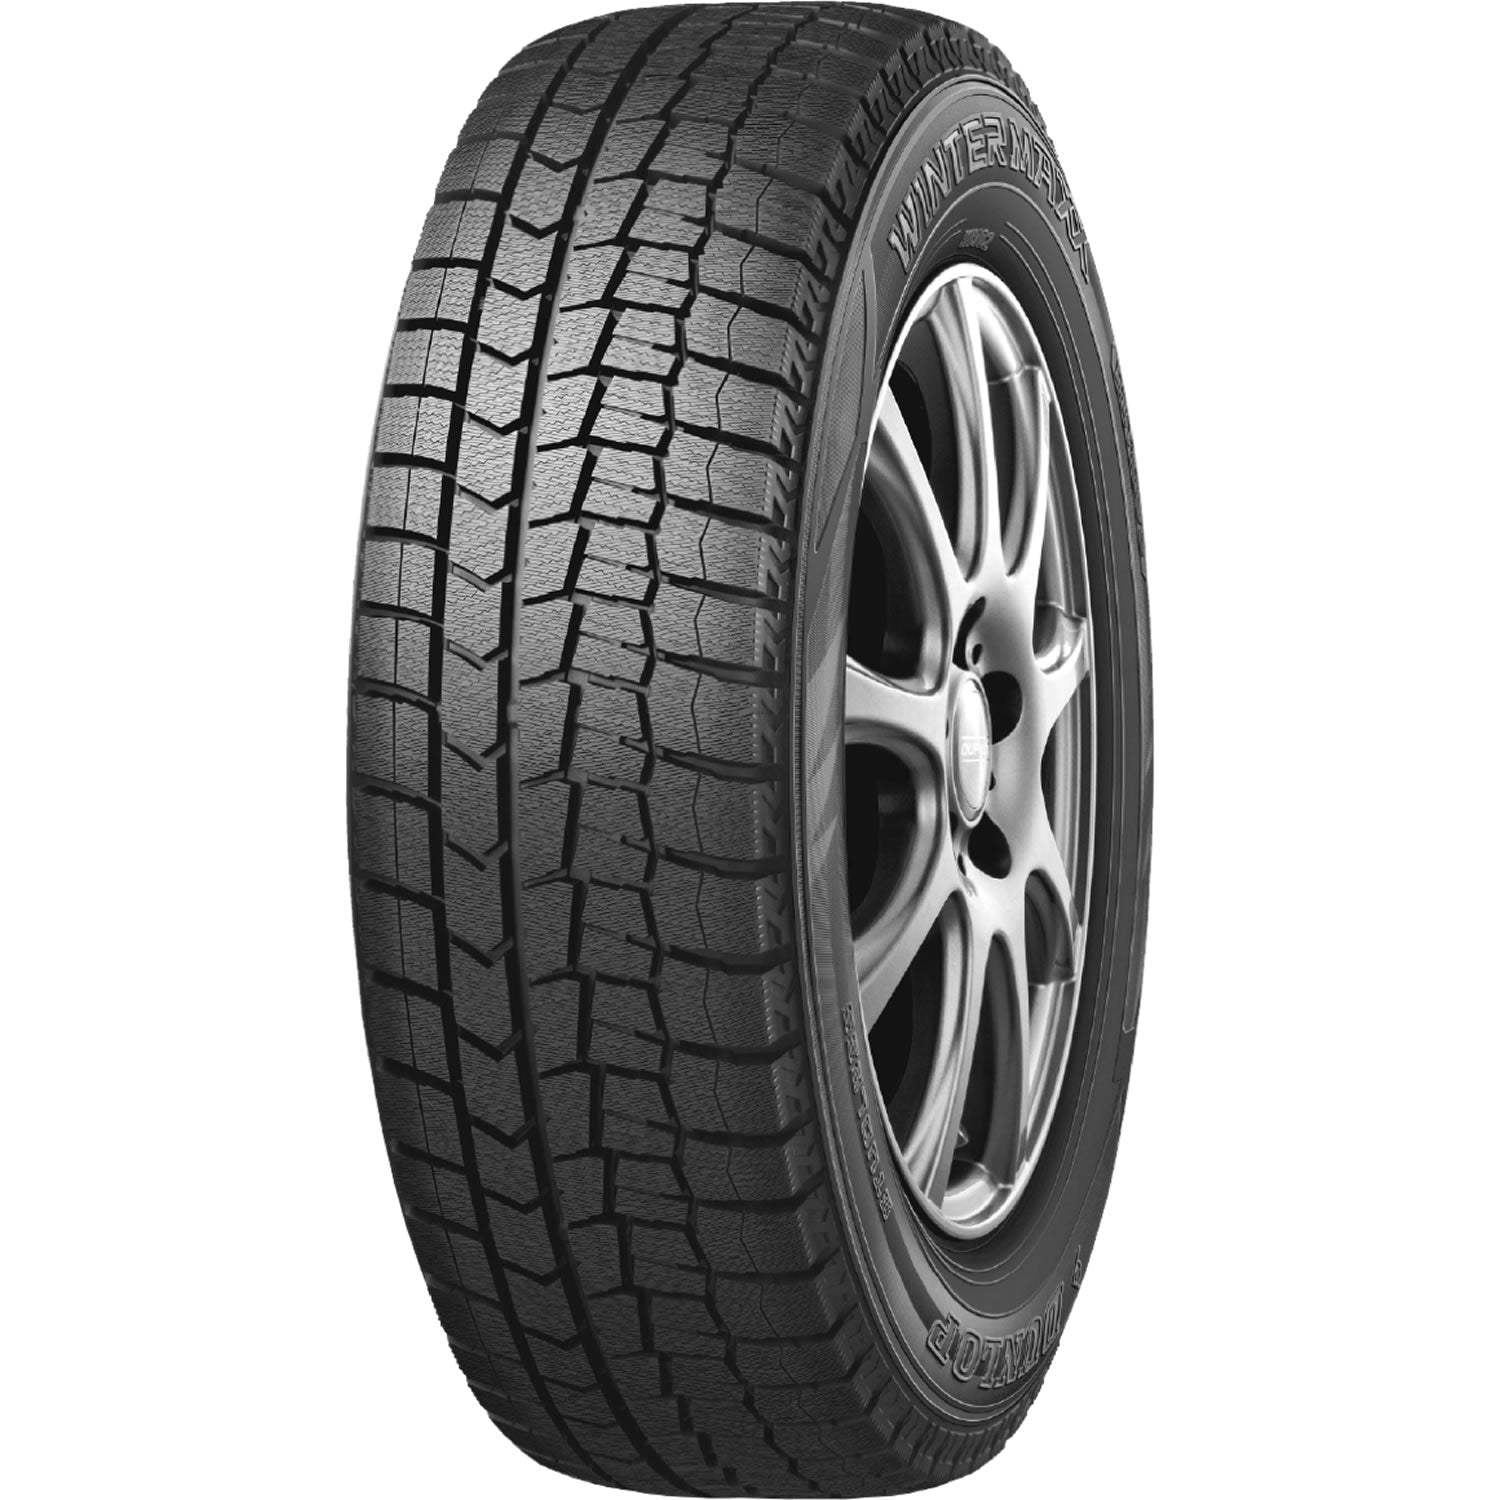 DUNLOP WINTER MAXX 2 185/55R16 (24.2X7.6R 16) Tires